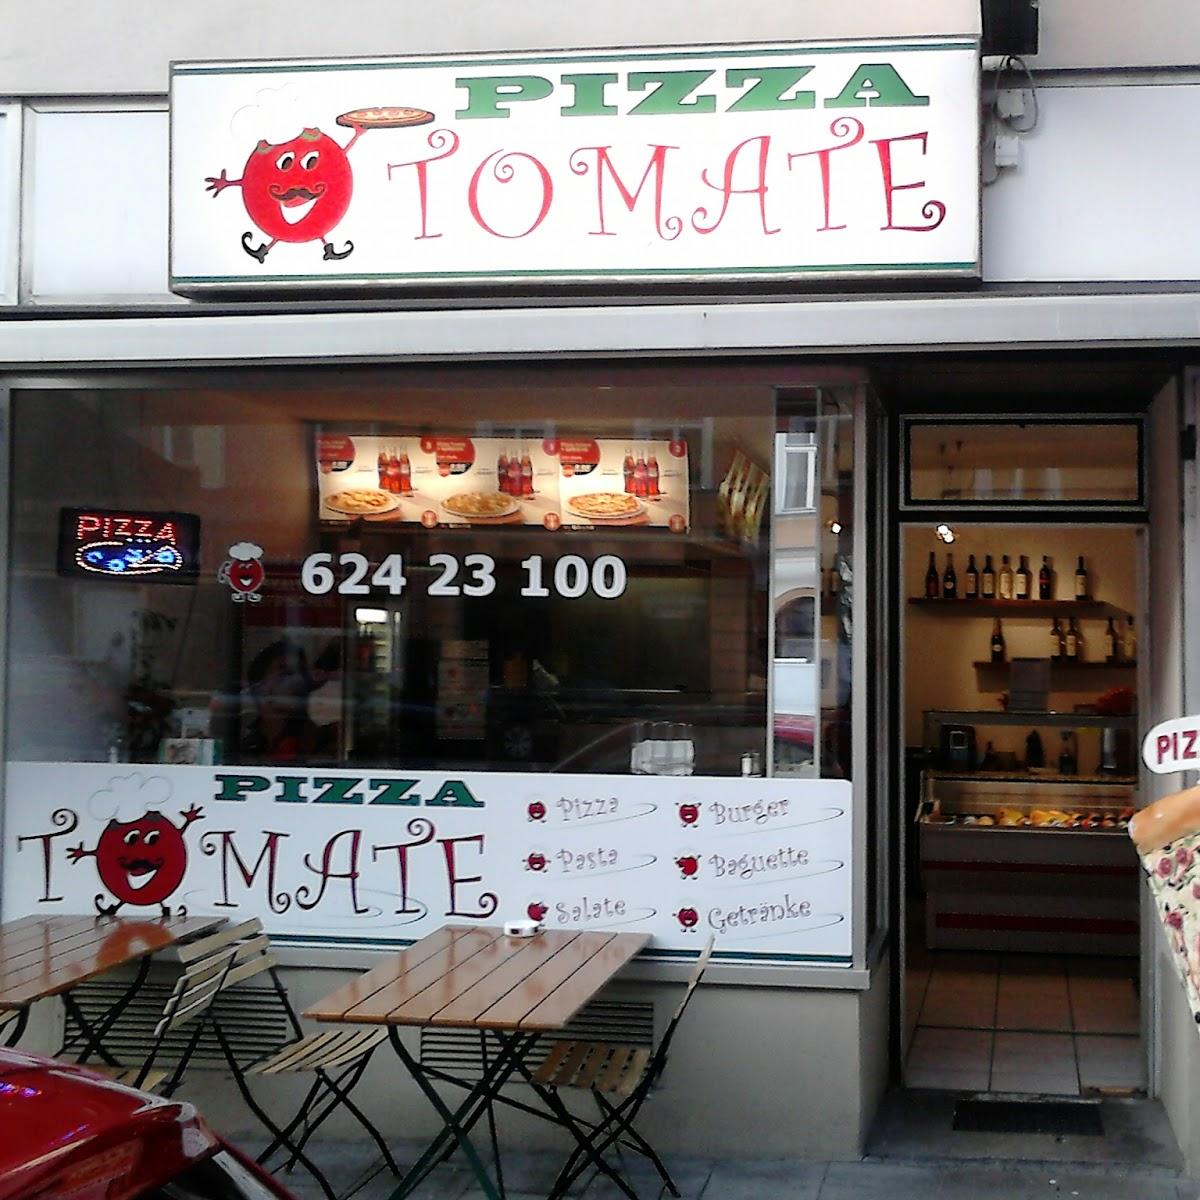 Restaurant "Pizza Tomate" in München